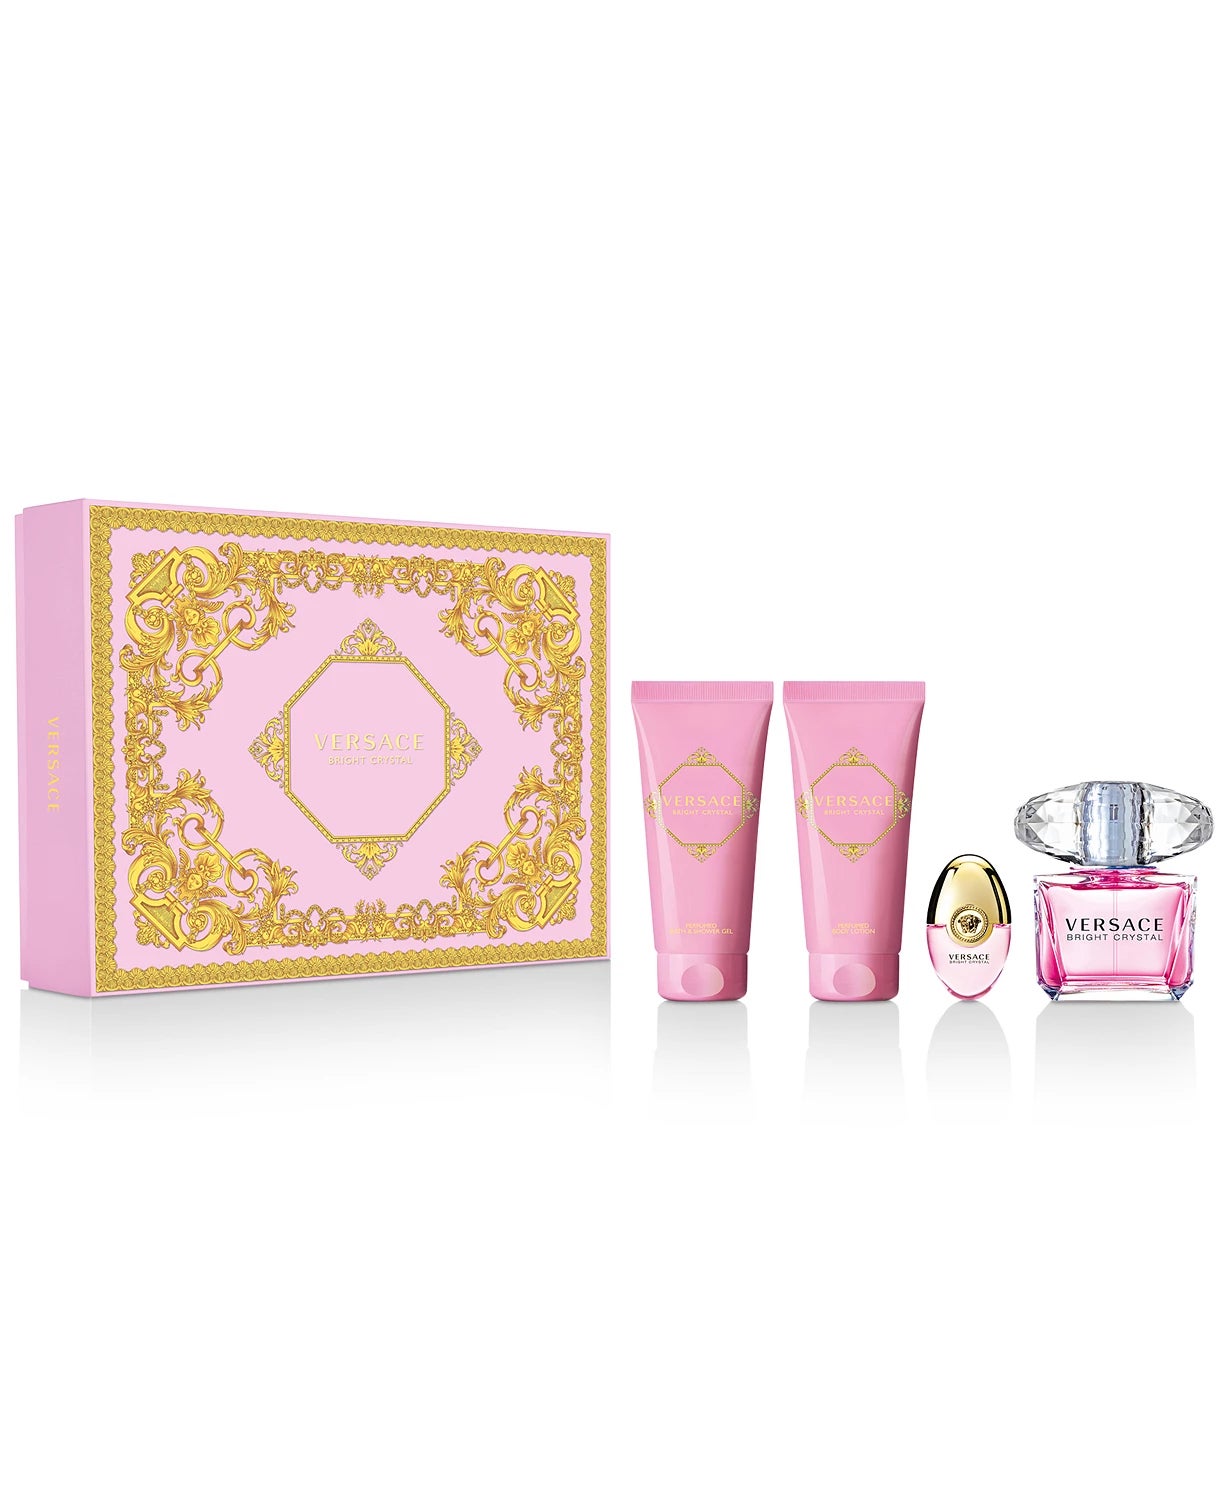 Versace + Luxury Holiday Gift Set